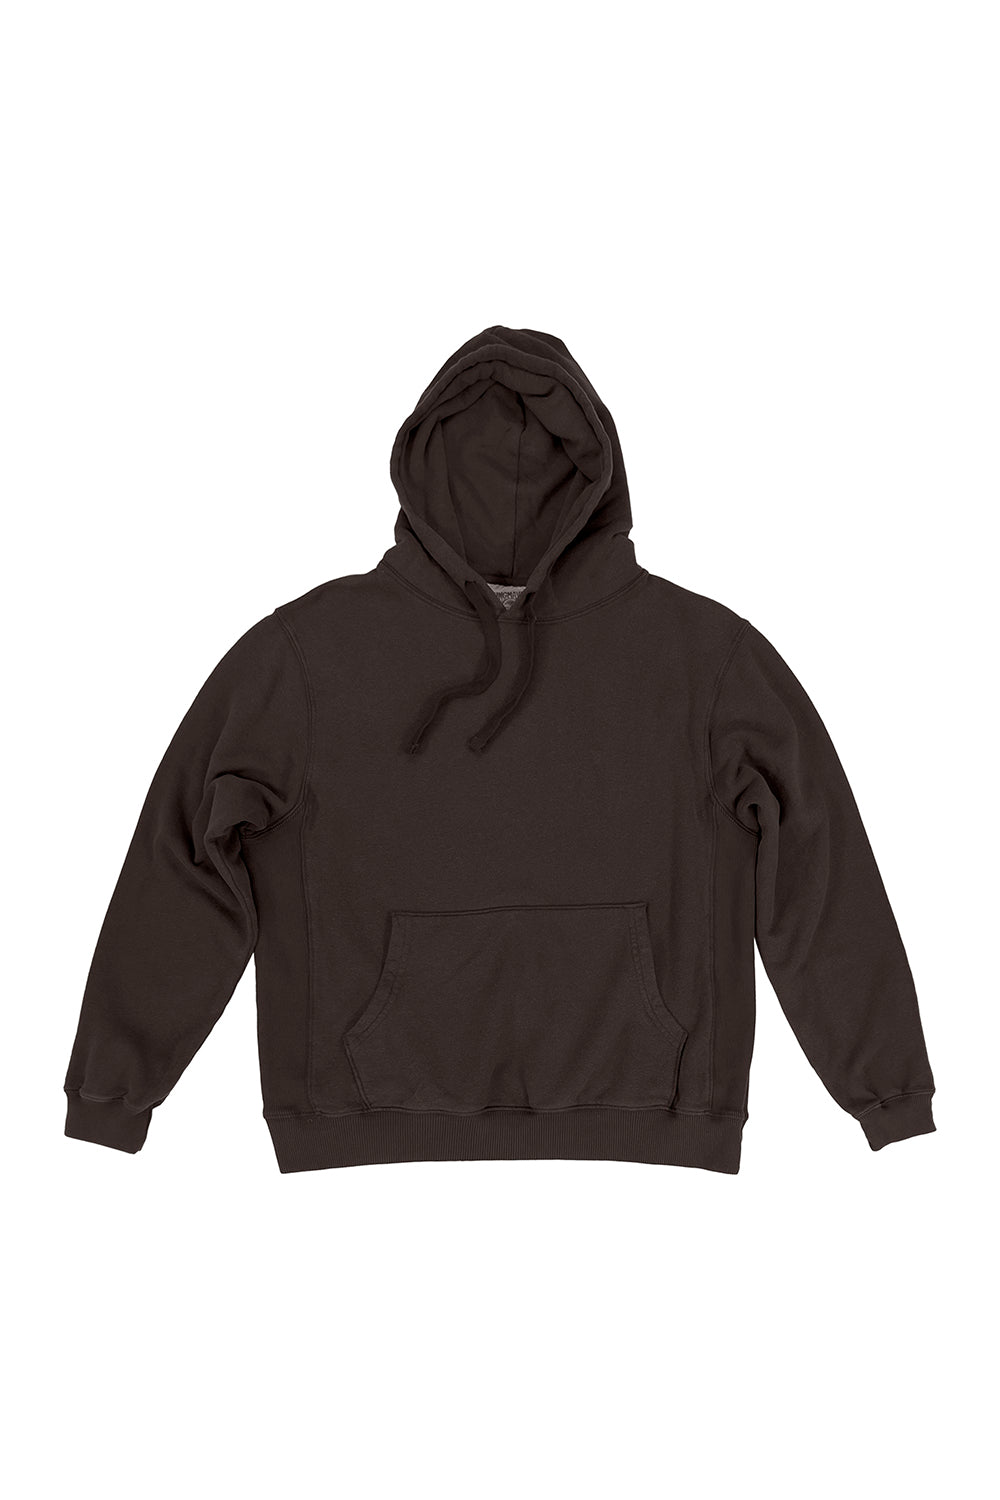 Montauk Hooded Sweatshirt | Jungmaven Hemp Clothing & Accessories / Color: Coffee Bean